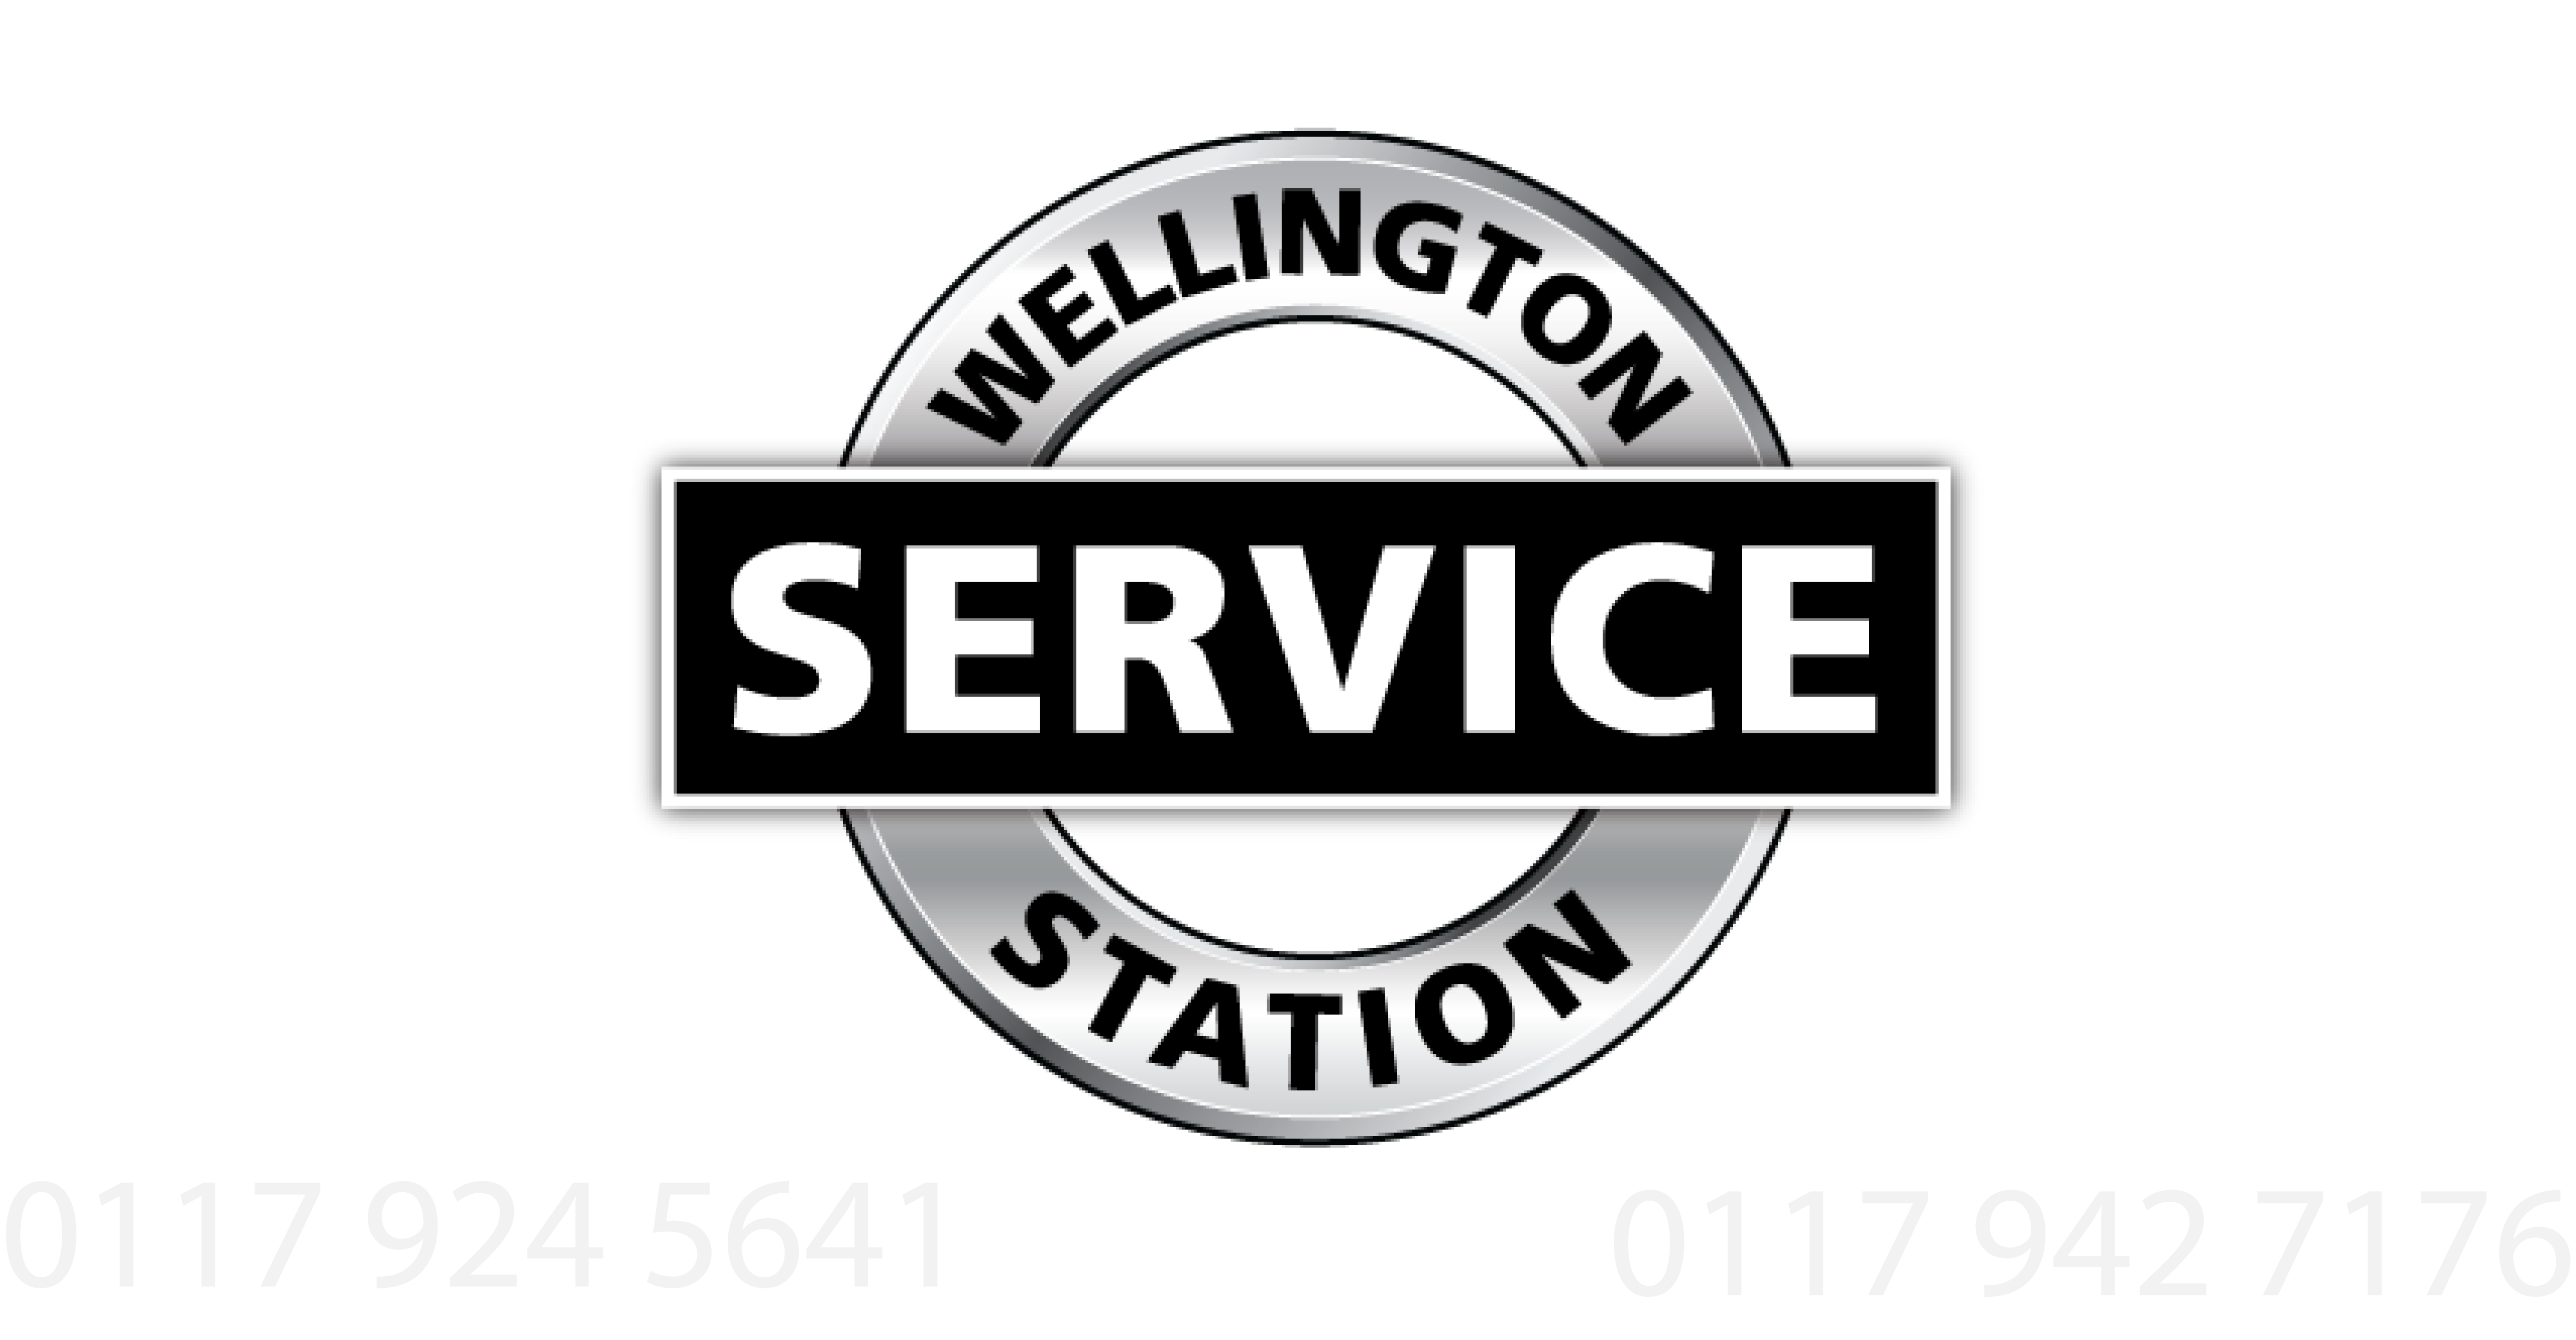 Wellington Service Station